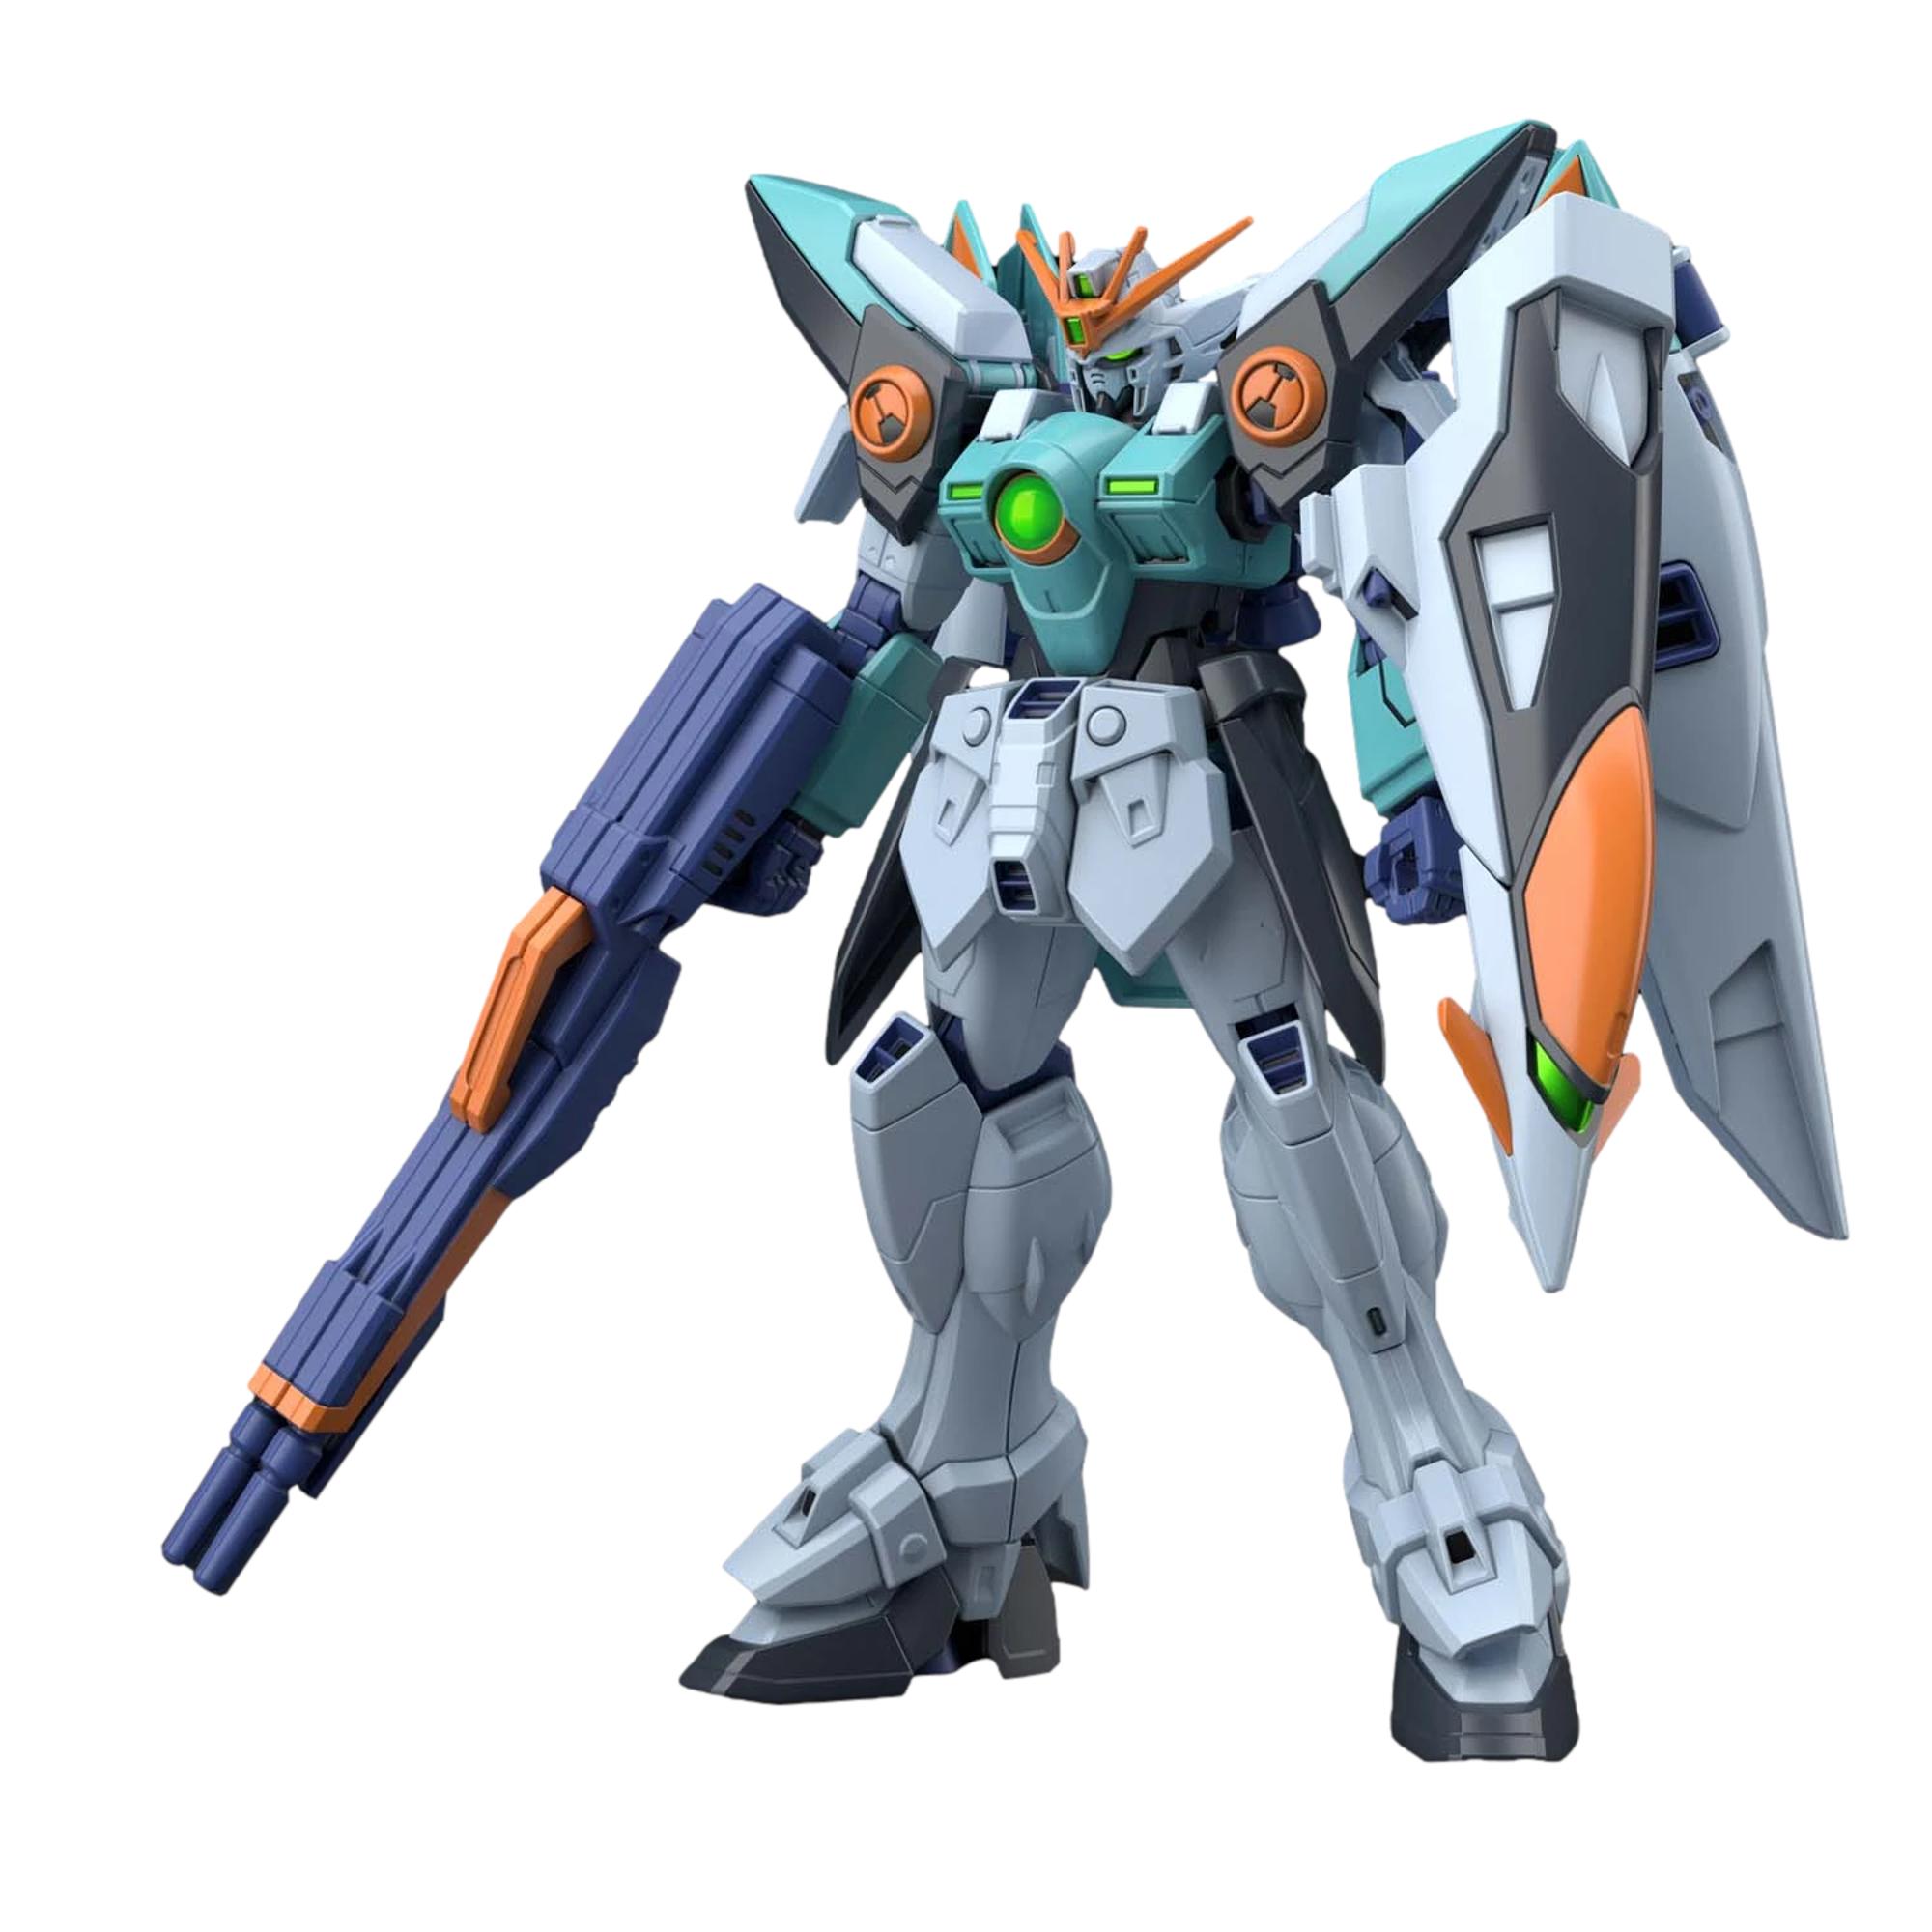 HG Gundam Breaker Battalogue - Wing Gundam Sky Zero